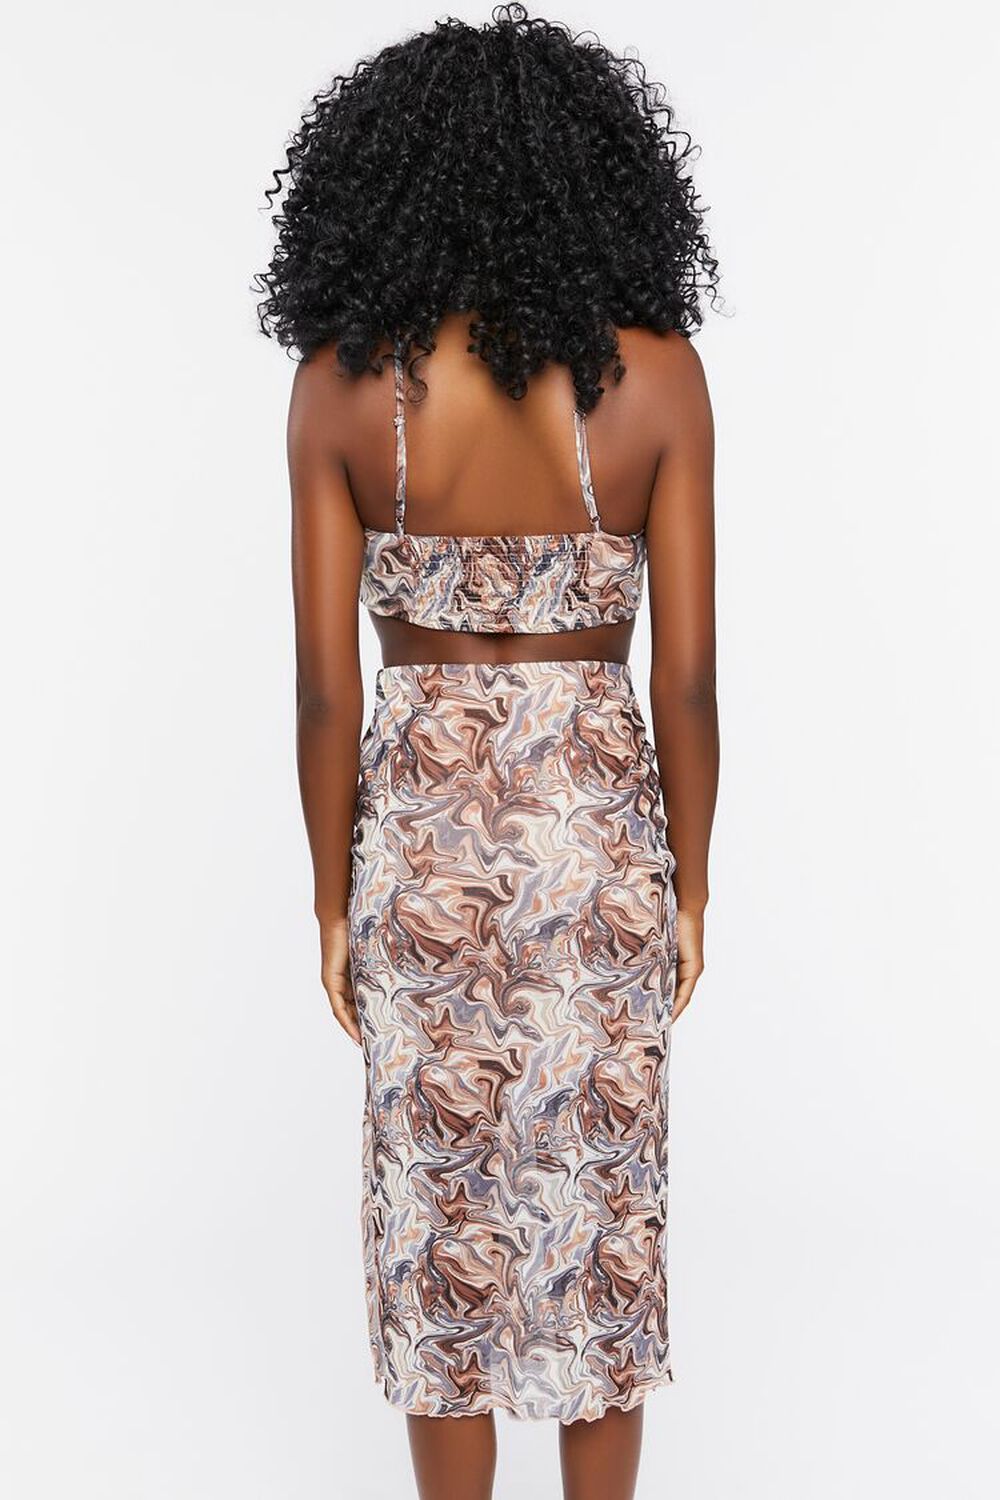 BROWN/MULTI Marble Print Cropped Cami & Skirt Set, image 3